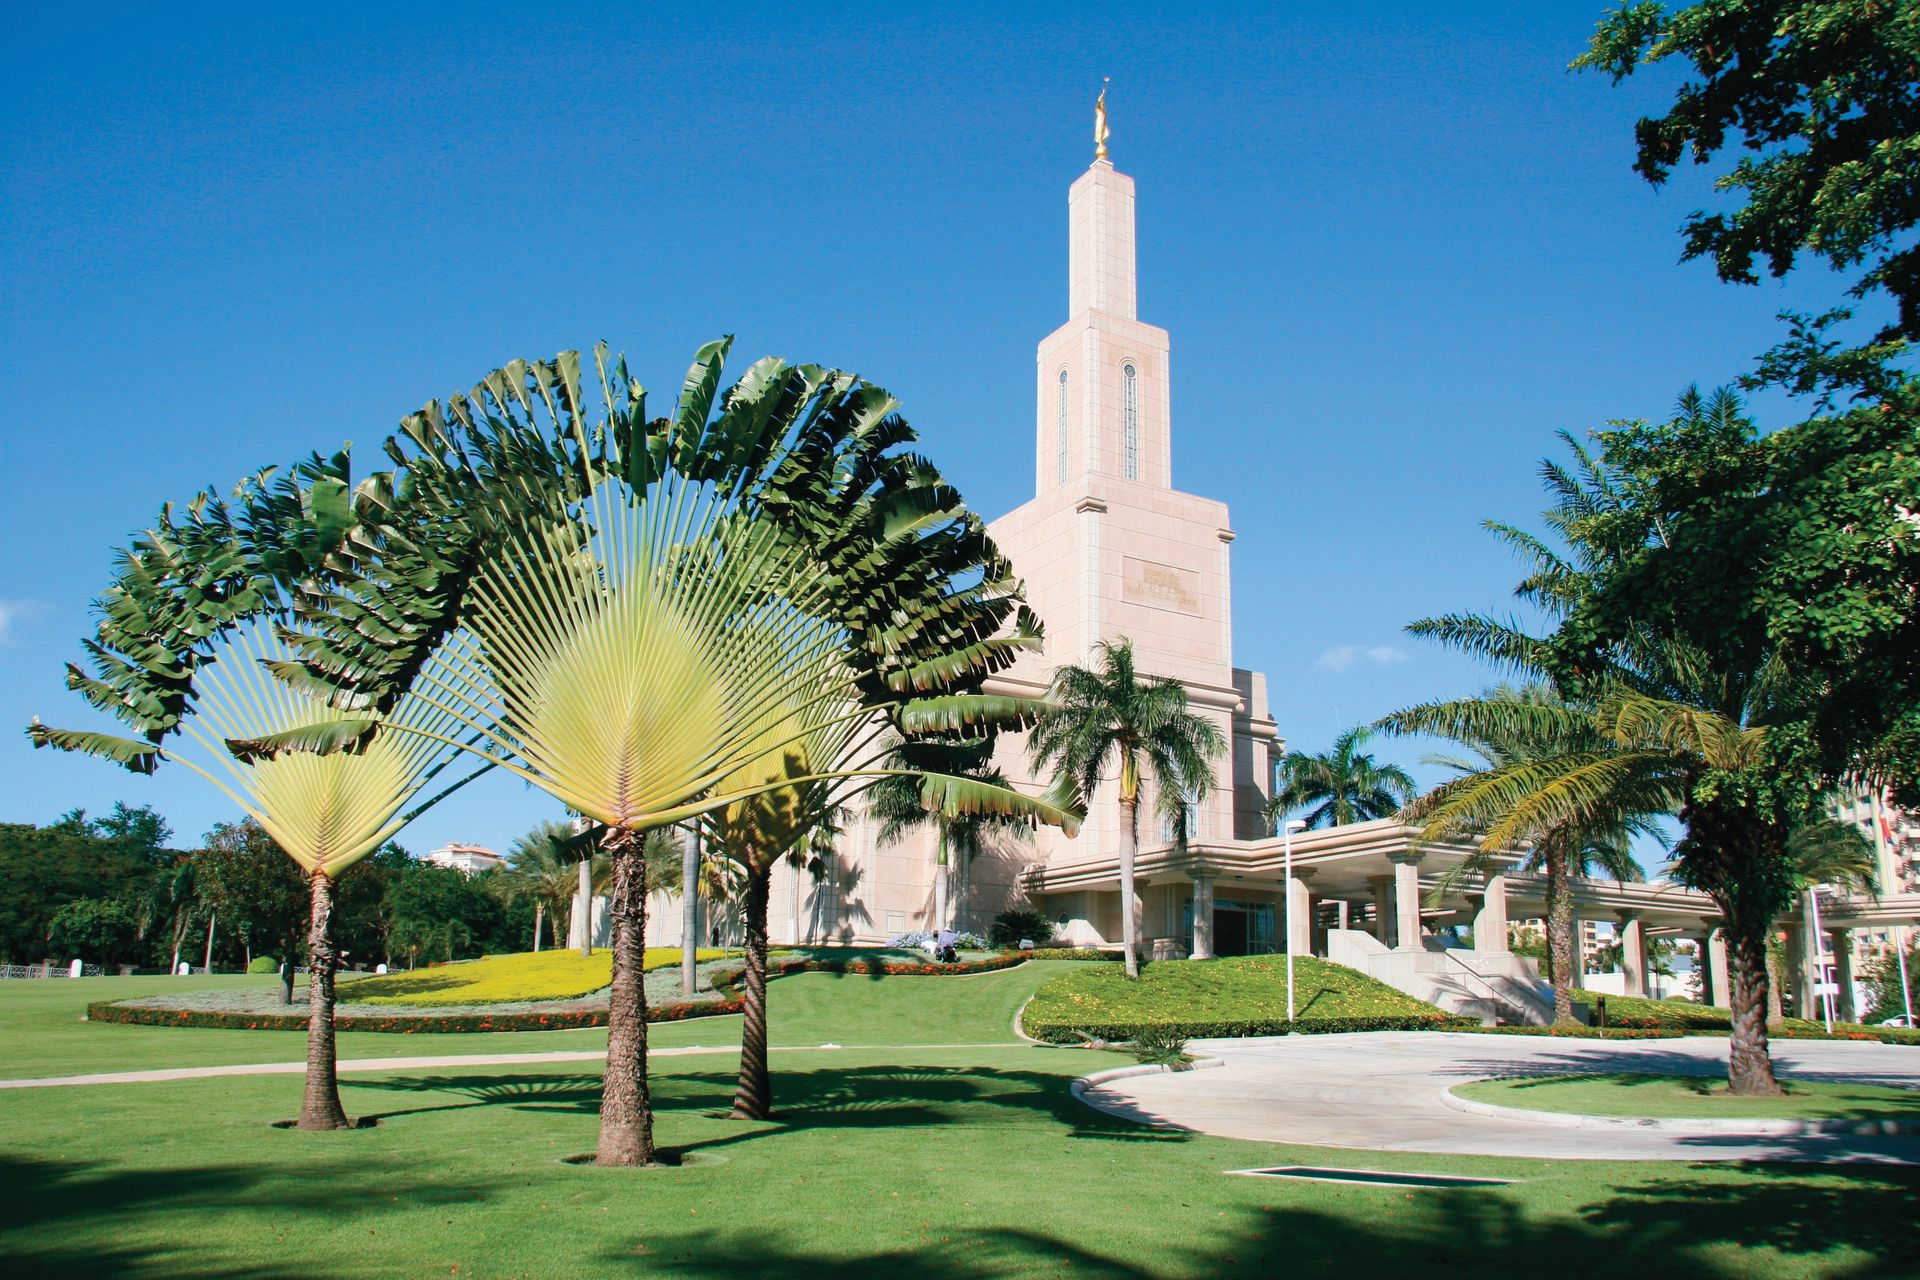 The Santo Domingo Dominican Republic Temple, including the entrance and scenery.